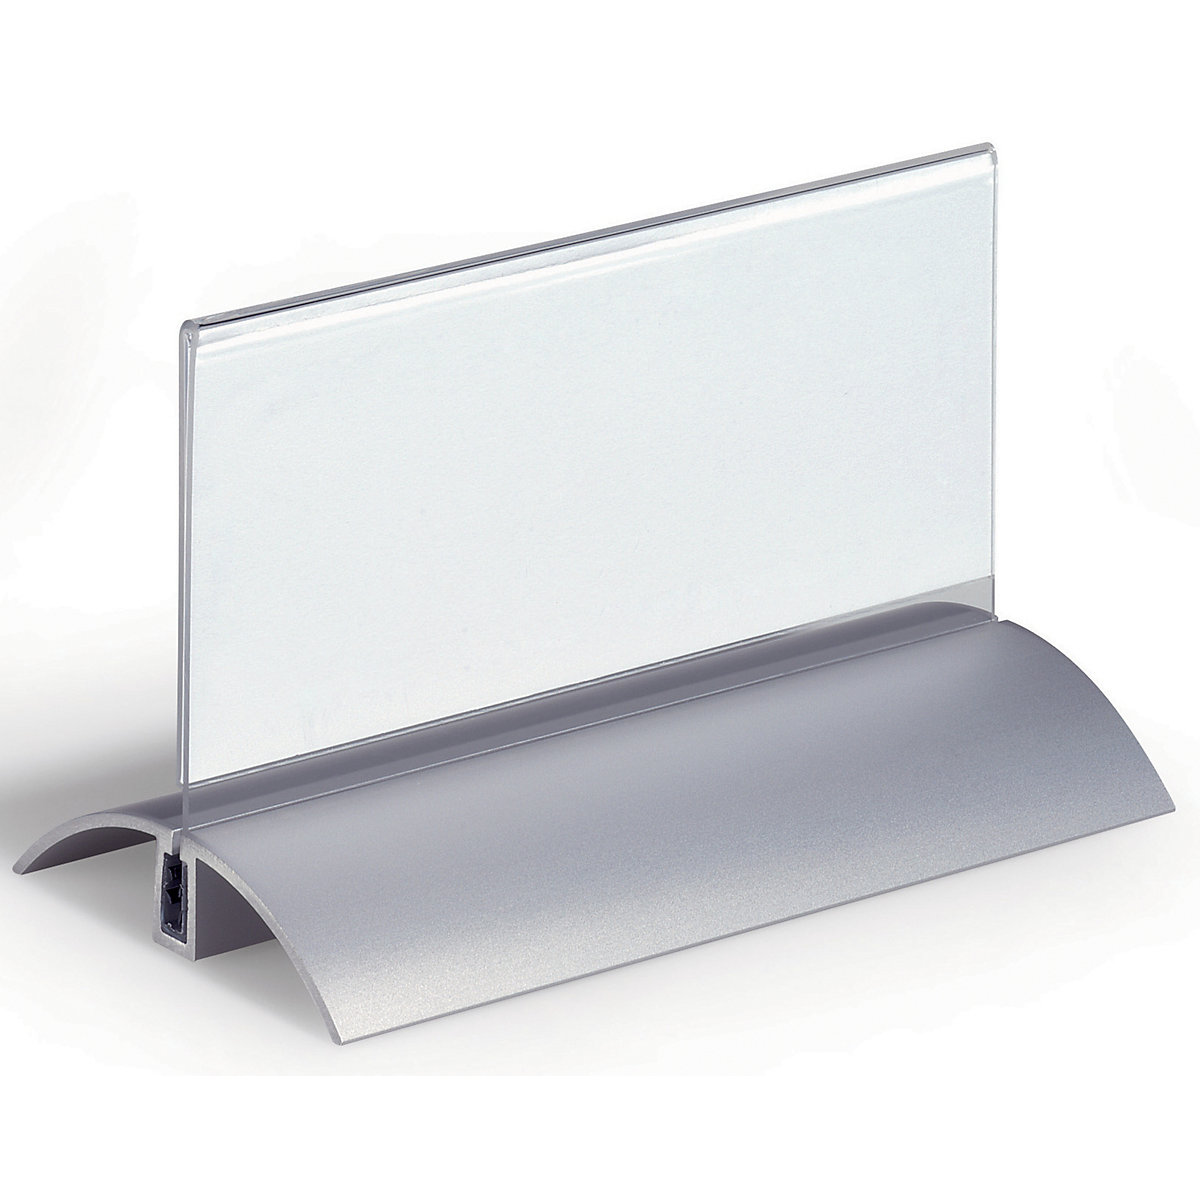 Table place name holder, acrylic, with aluminium base - DURABLE